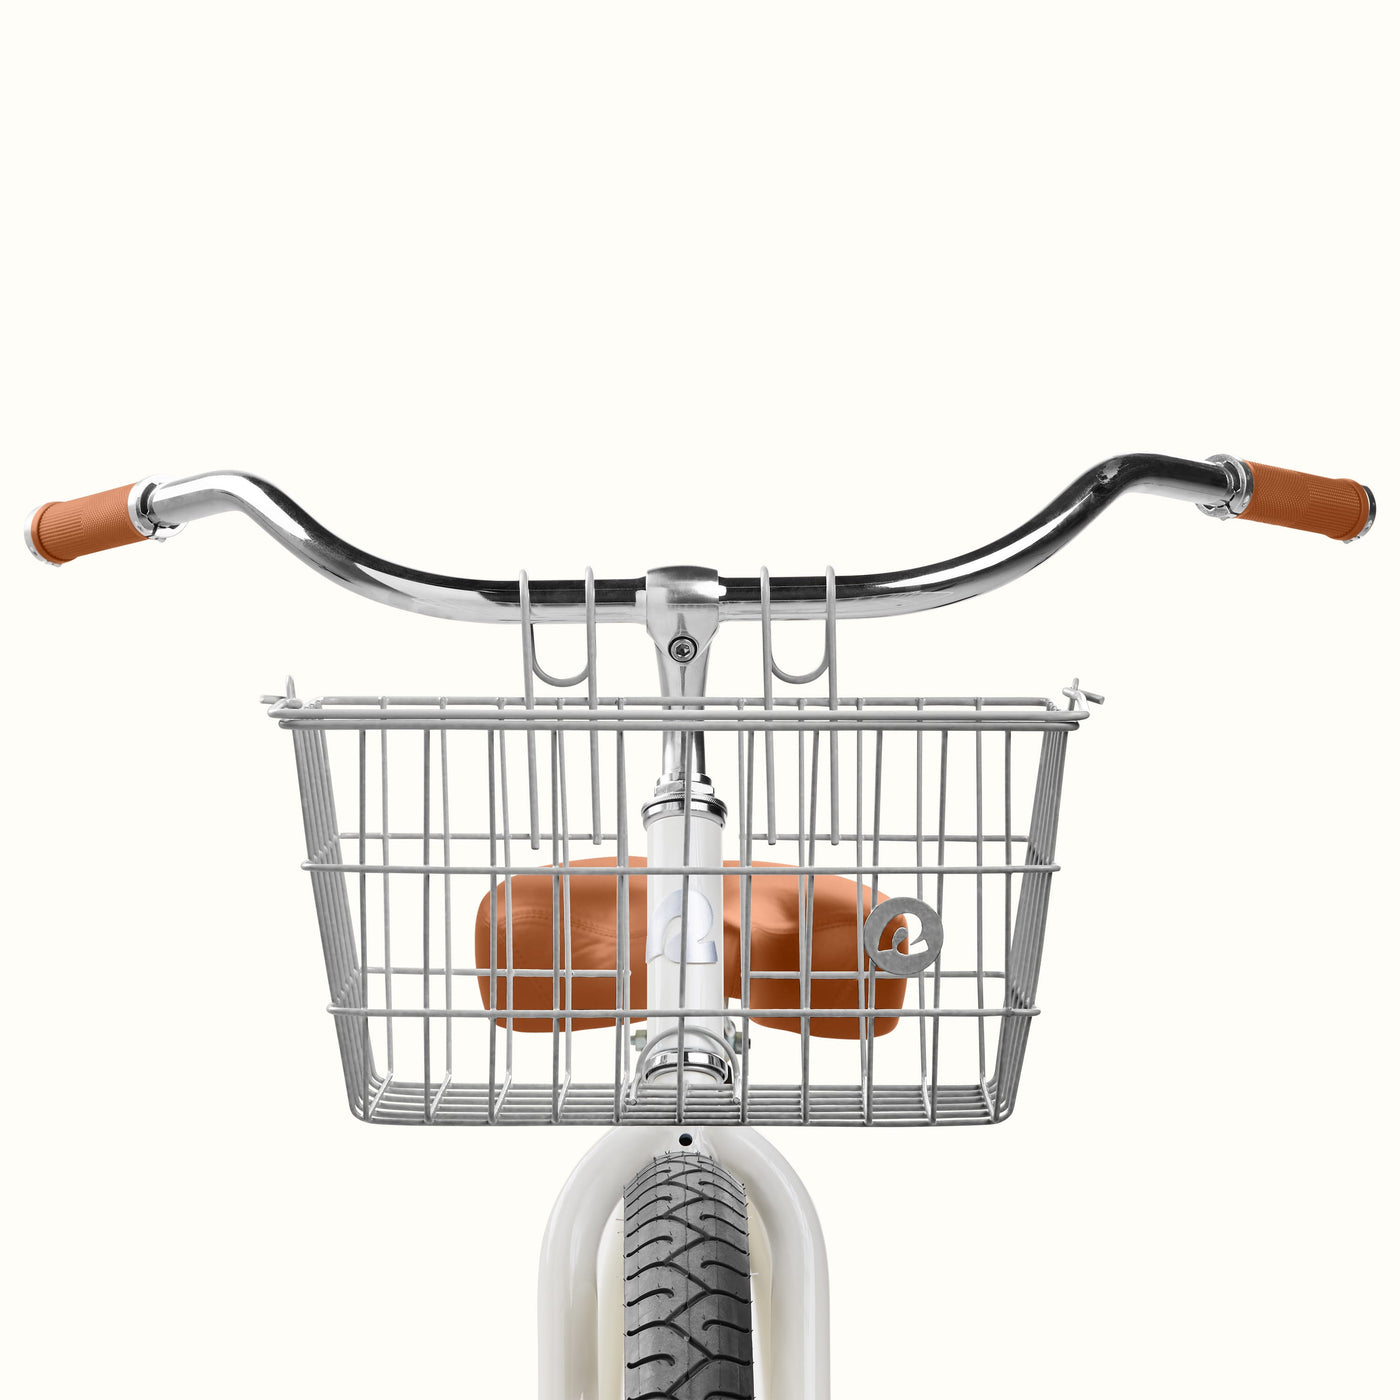 Apollo-Lite Bike Basket | Silver